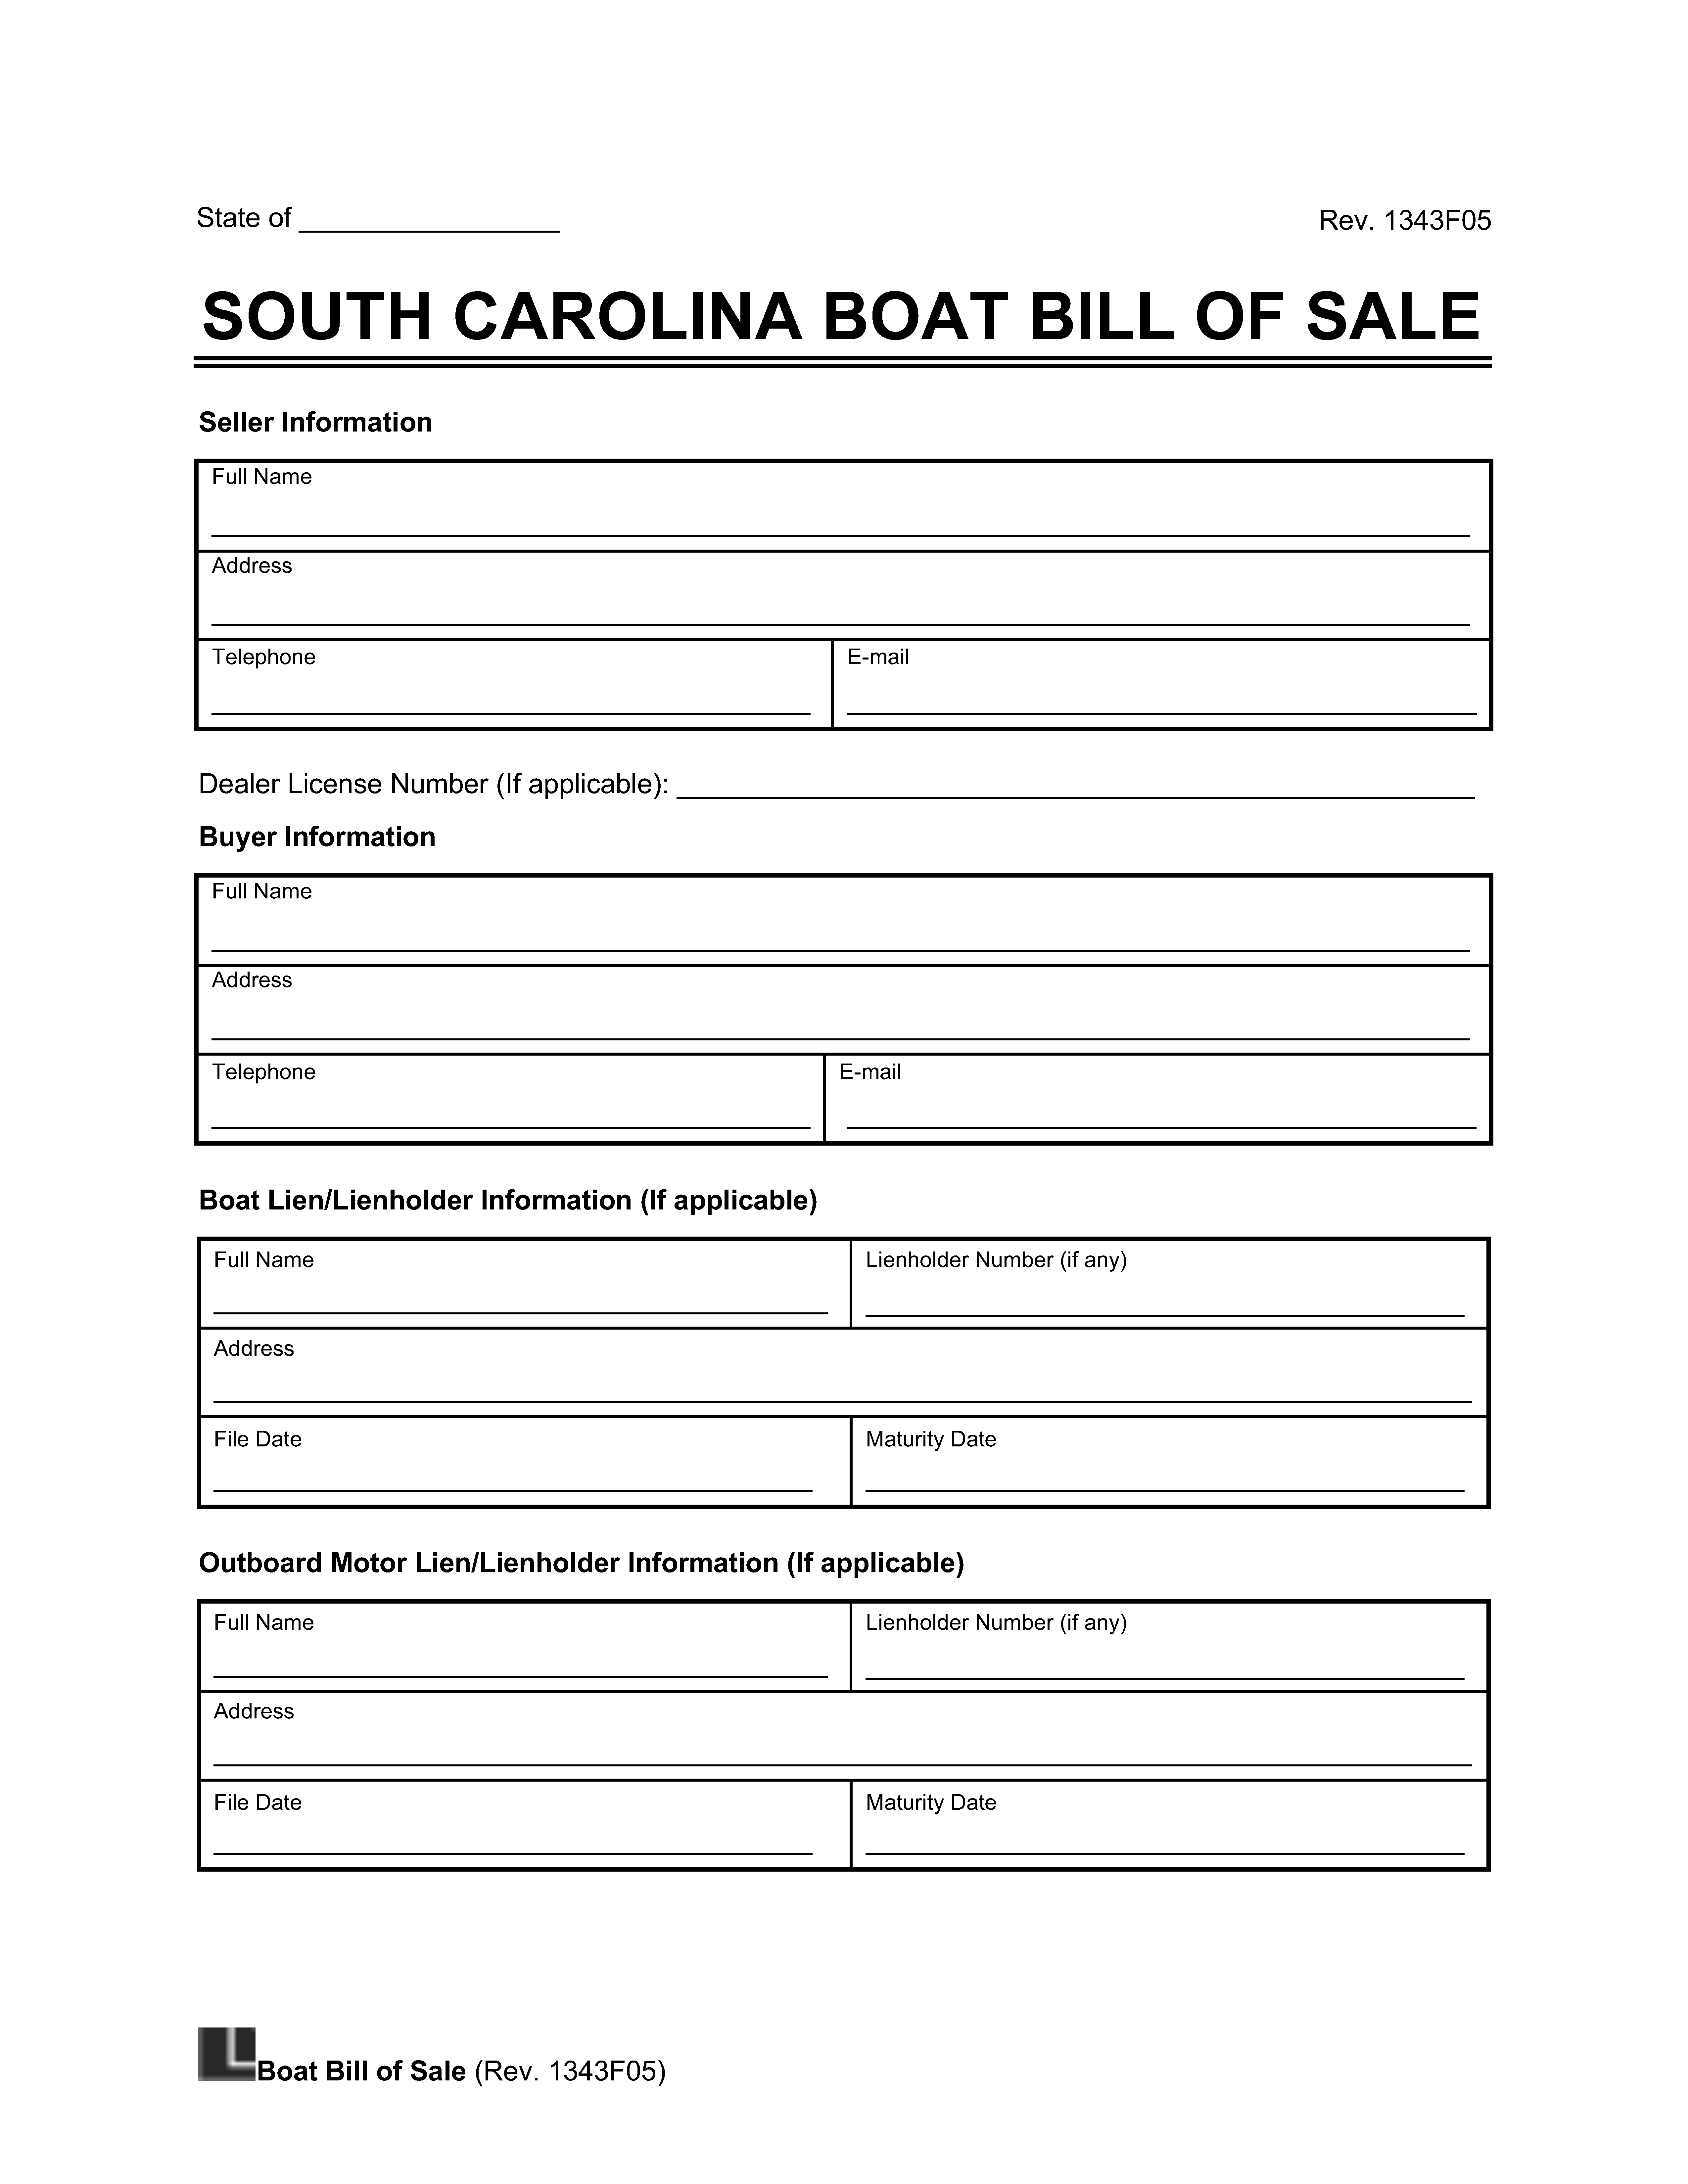 South Carolina Boat Bill of Sale Template